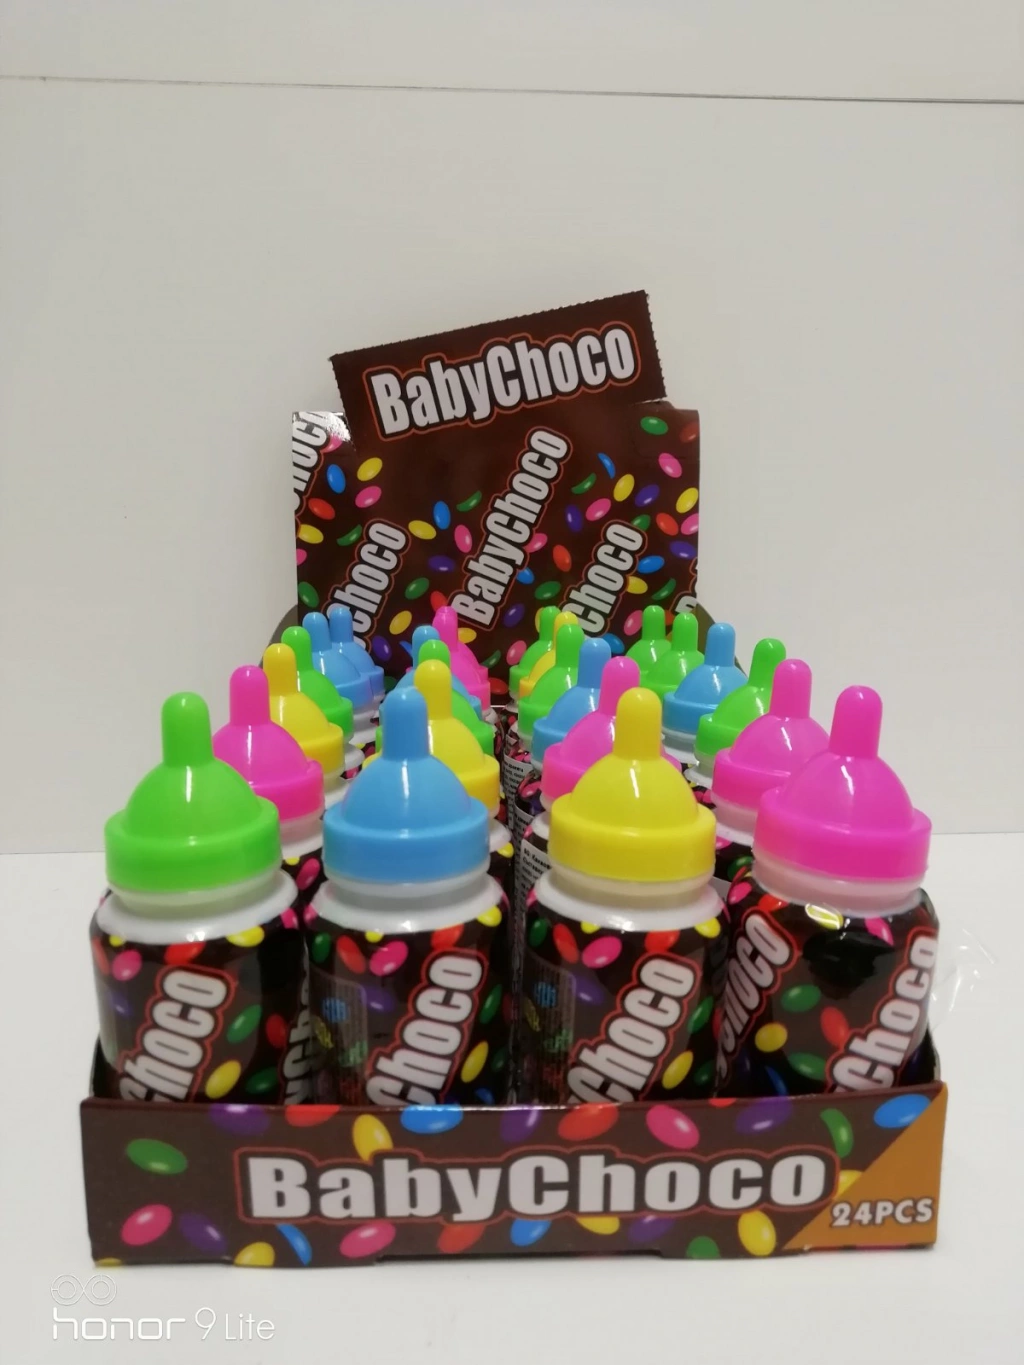 Baby Choco bottle